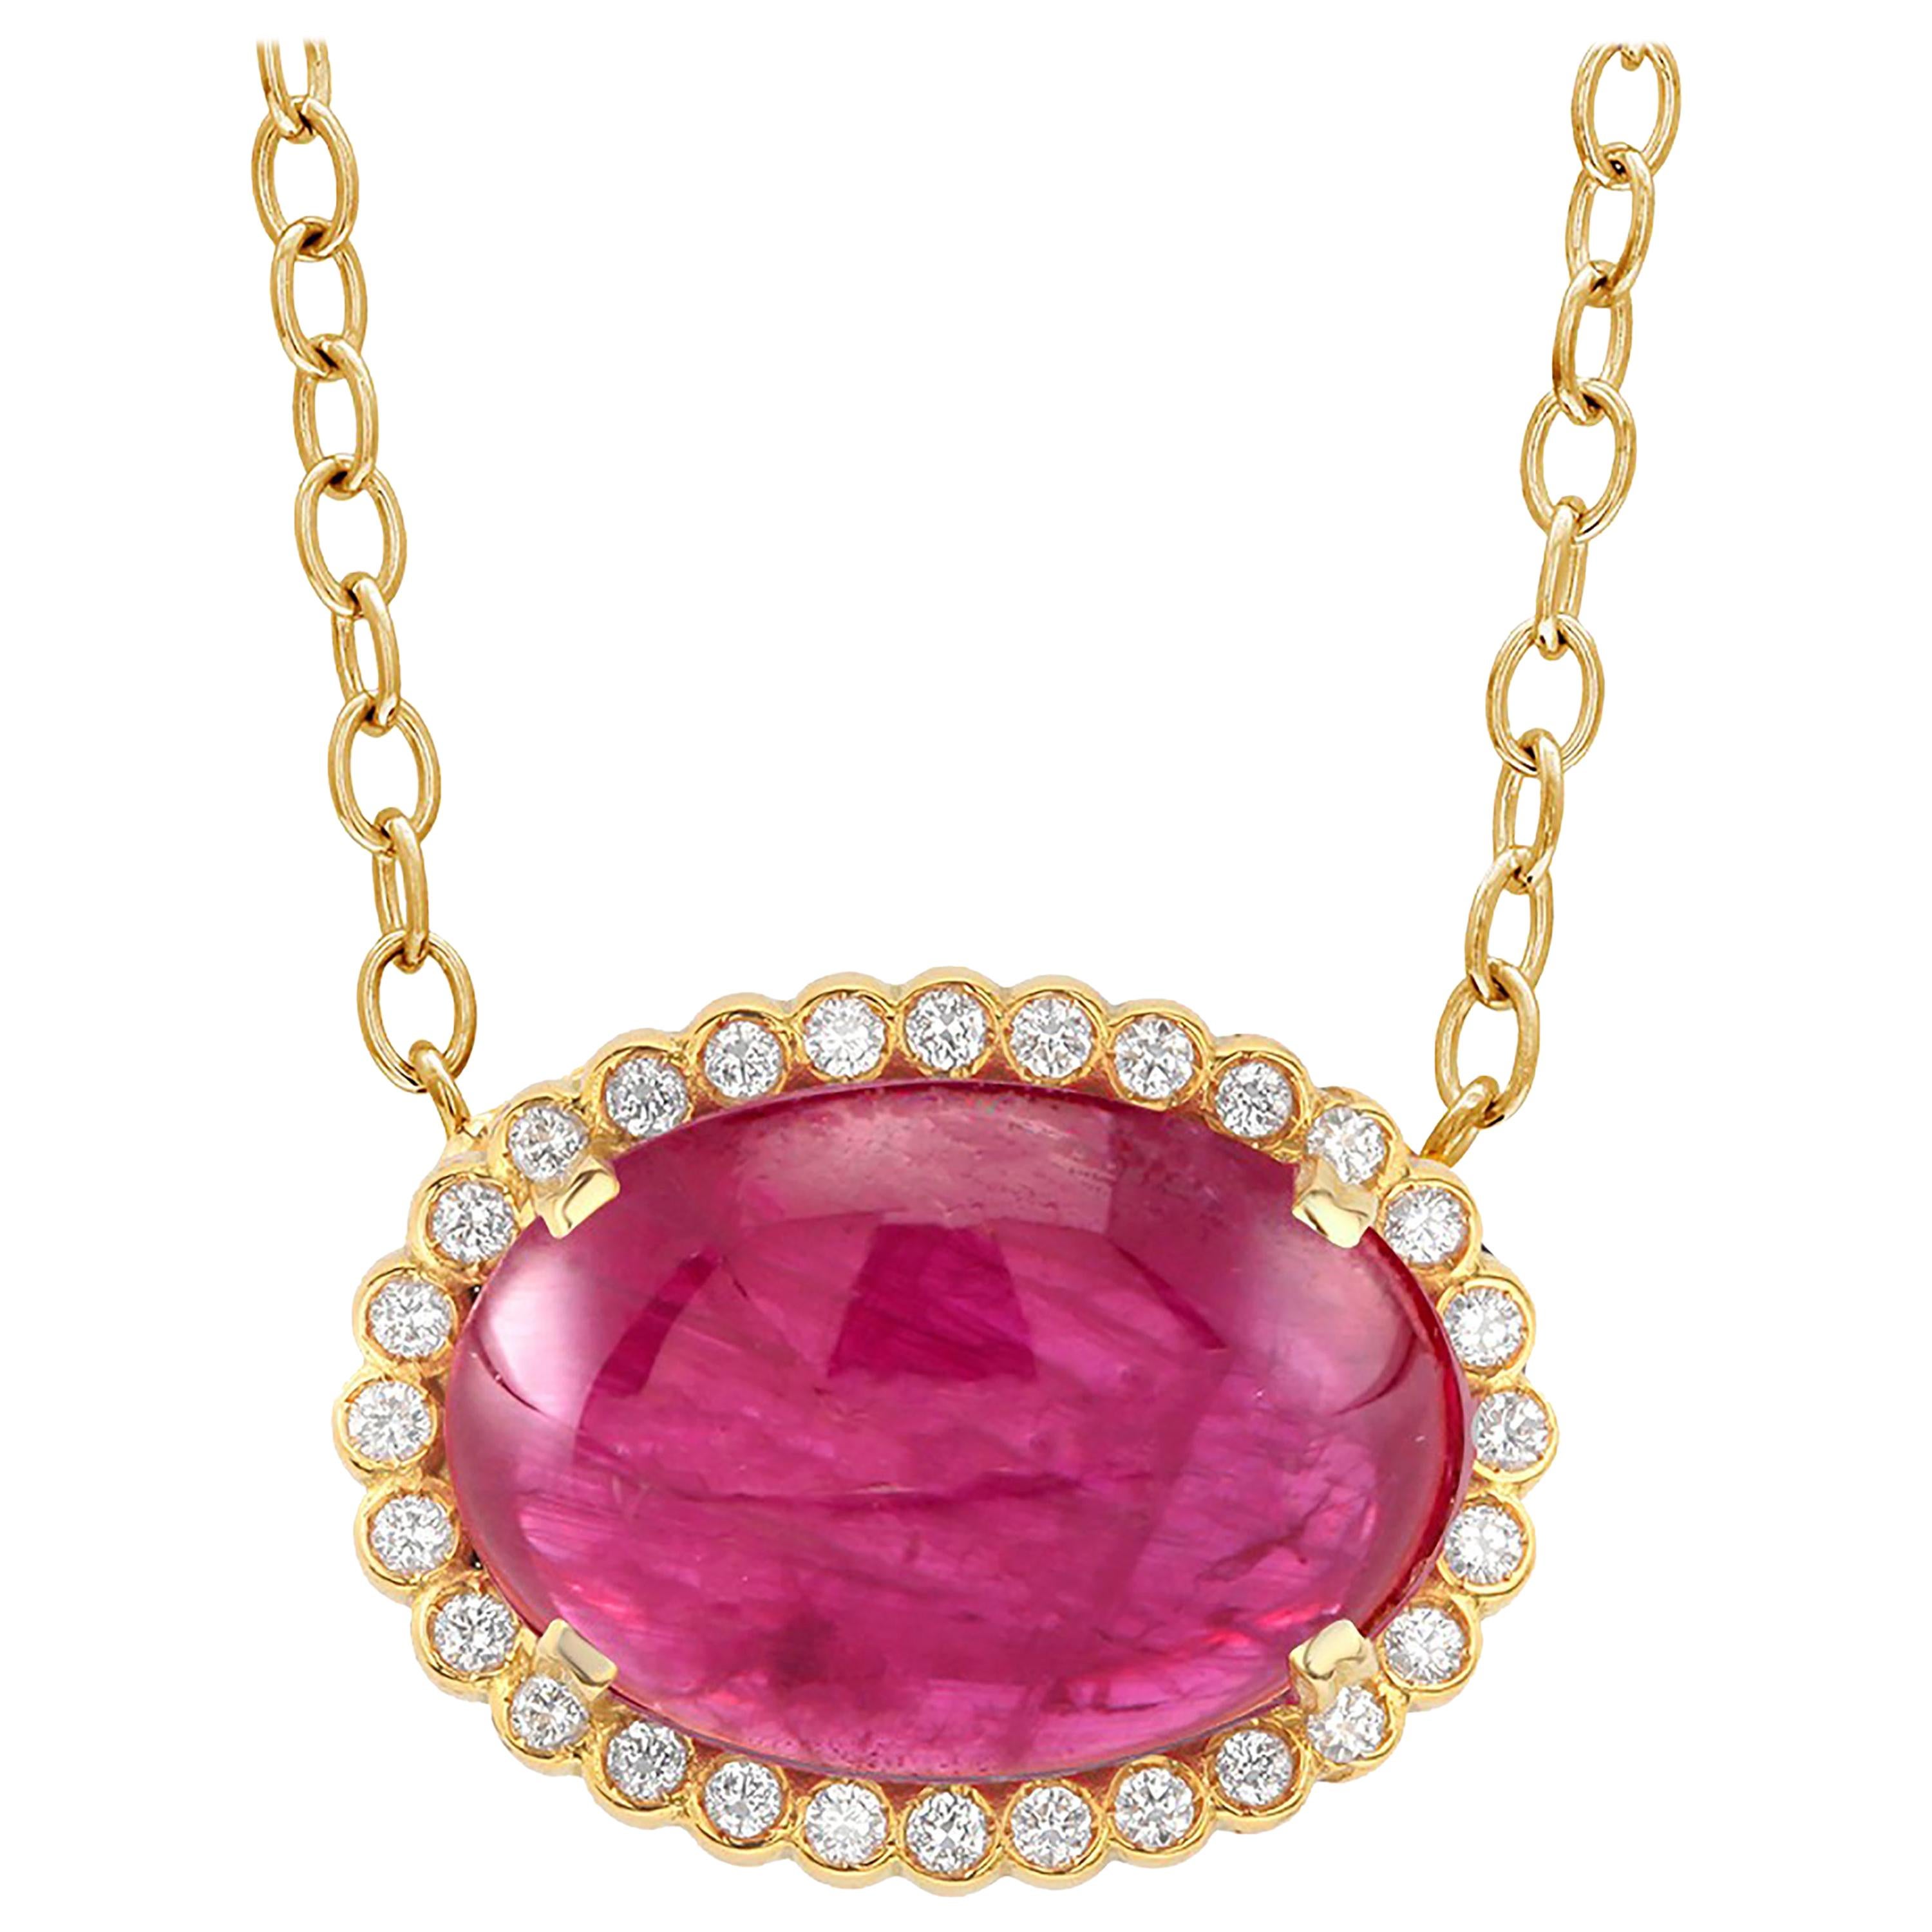 Cabochon Burma Ruby Diamond Gold Drop Necklace Pendant Weighing 21.86 Carat